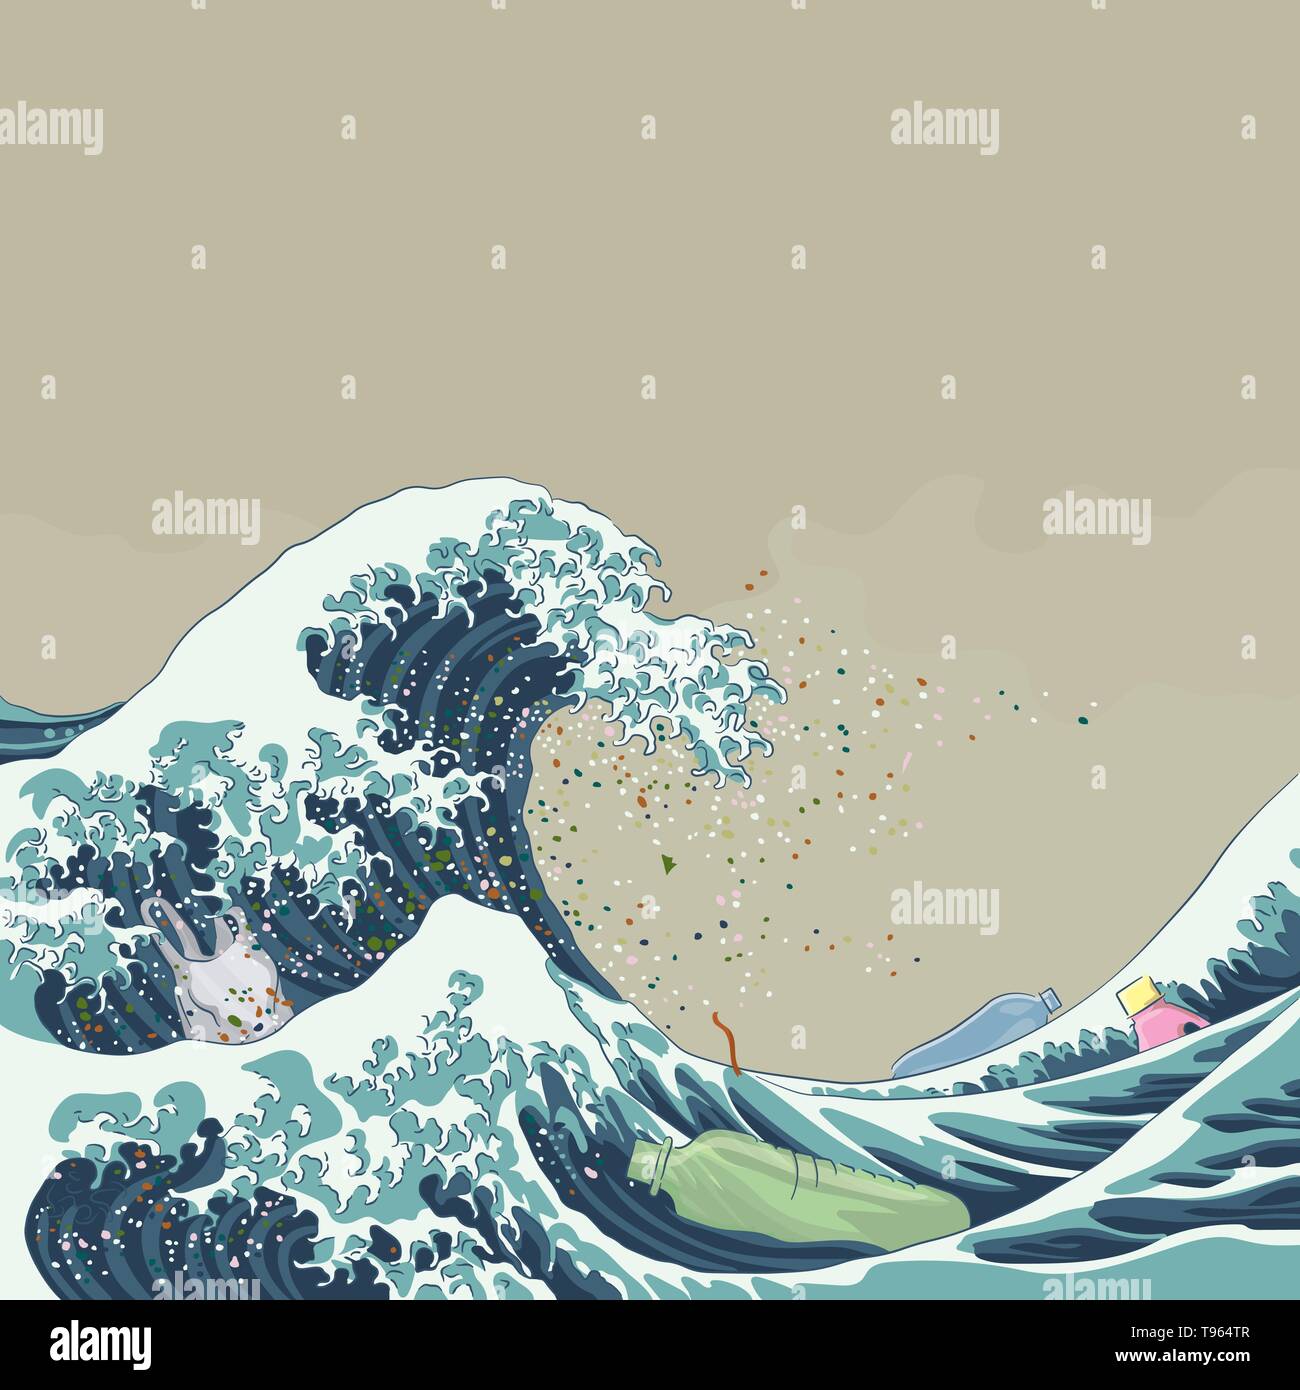 Aquatische Kunststoff Verschmutzung Konzept. Große Welle der Mikroplastik, japanischen Holzschnitt stil Vector Illustration Stock Vektor